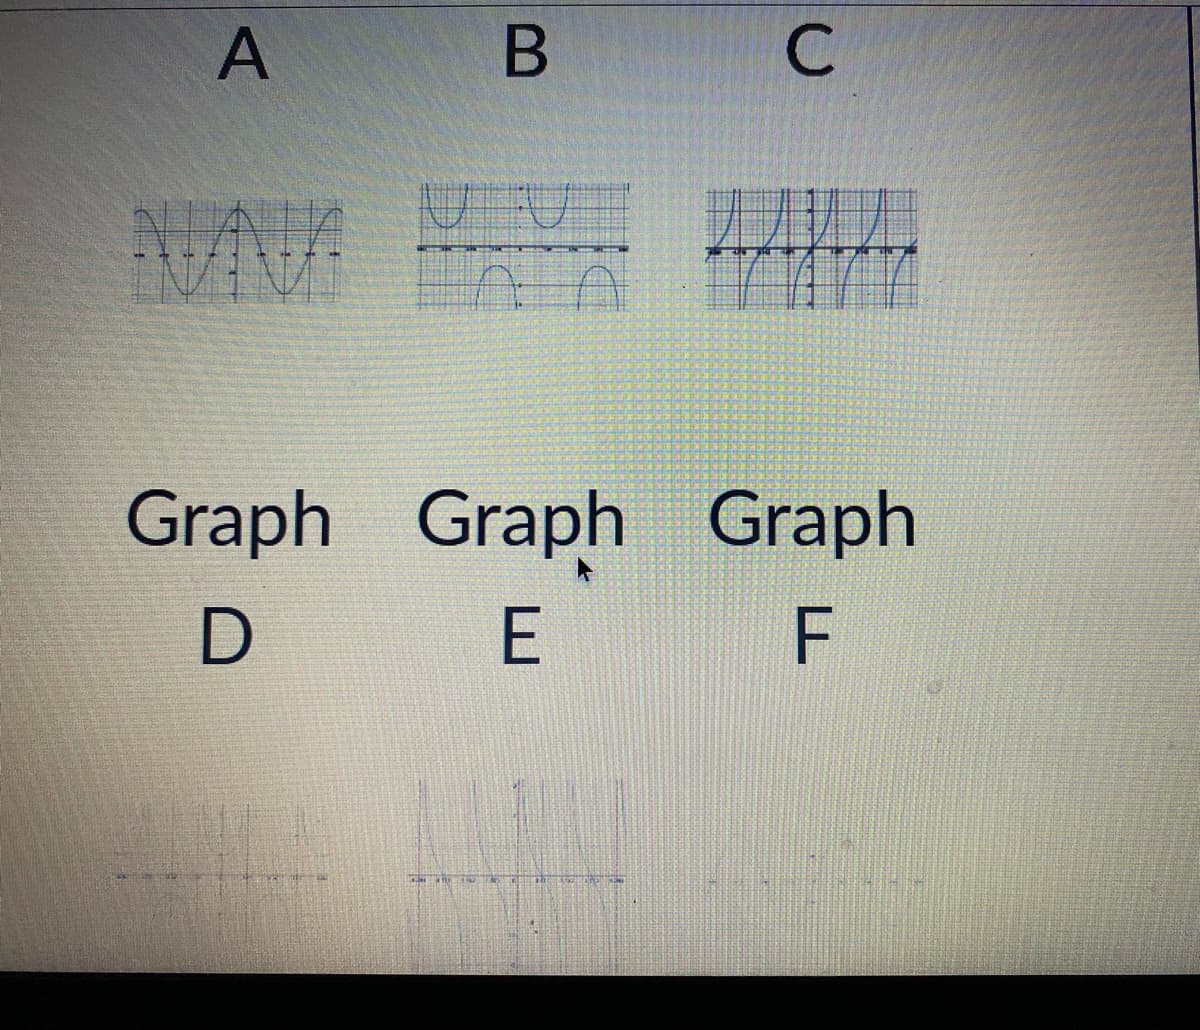 A
C
U
NAVA
Graph Graph Graph
D
E
F
B